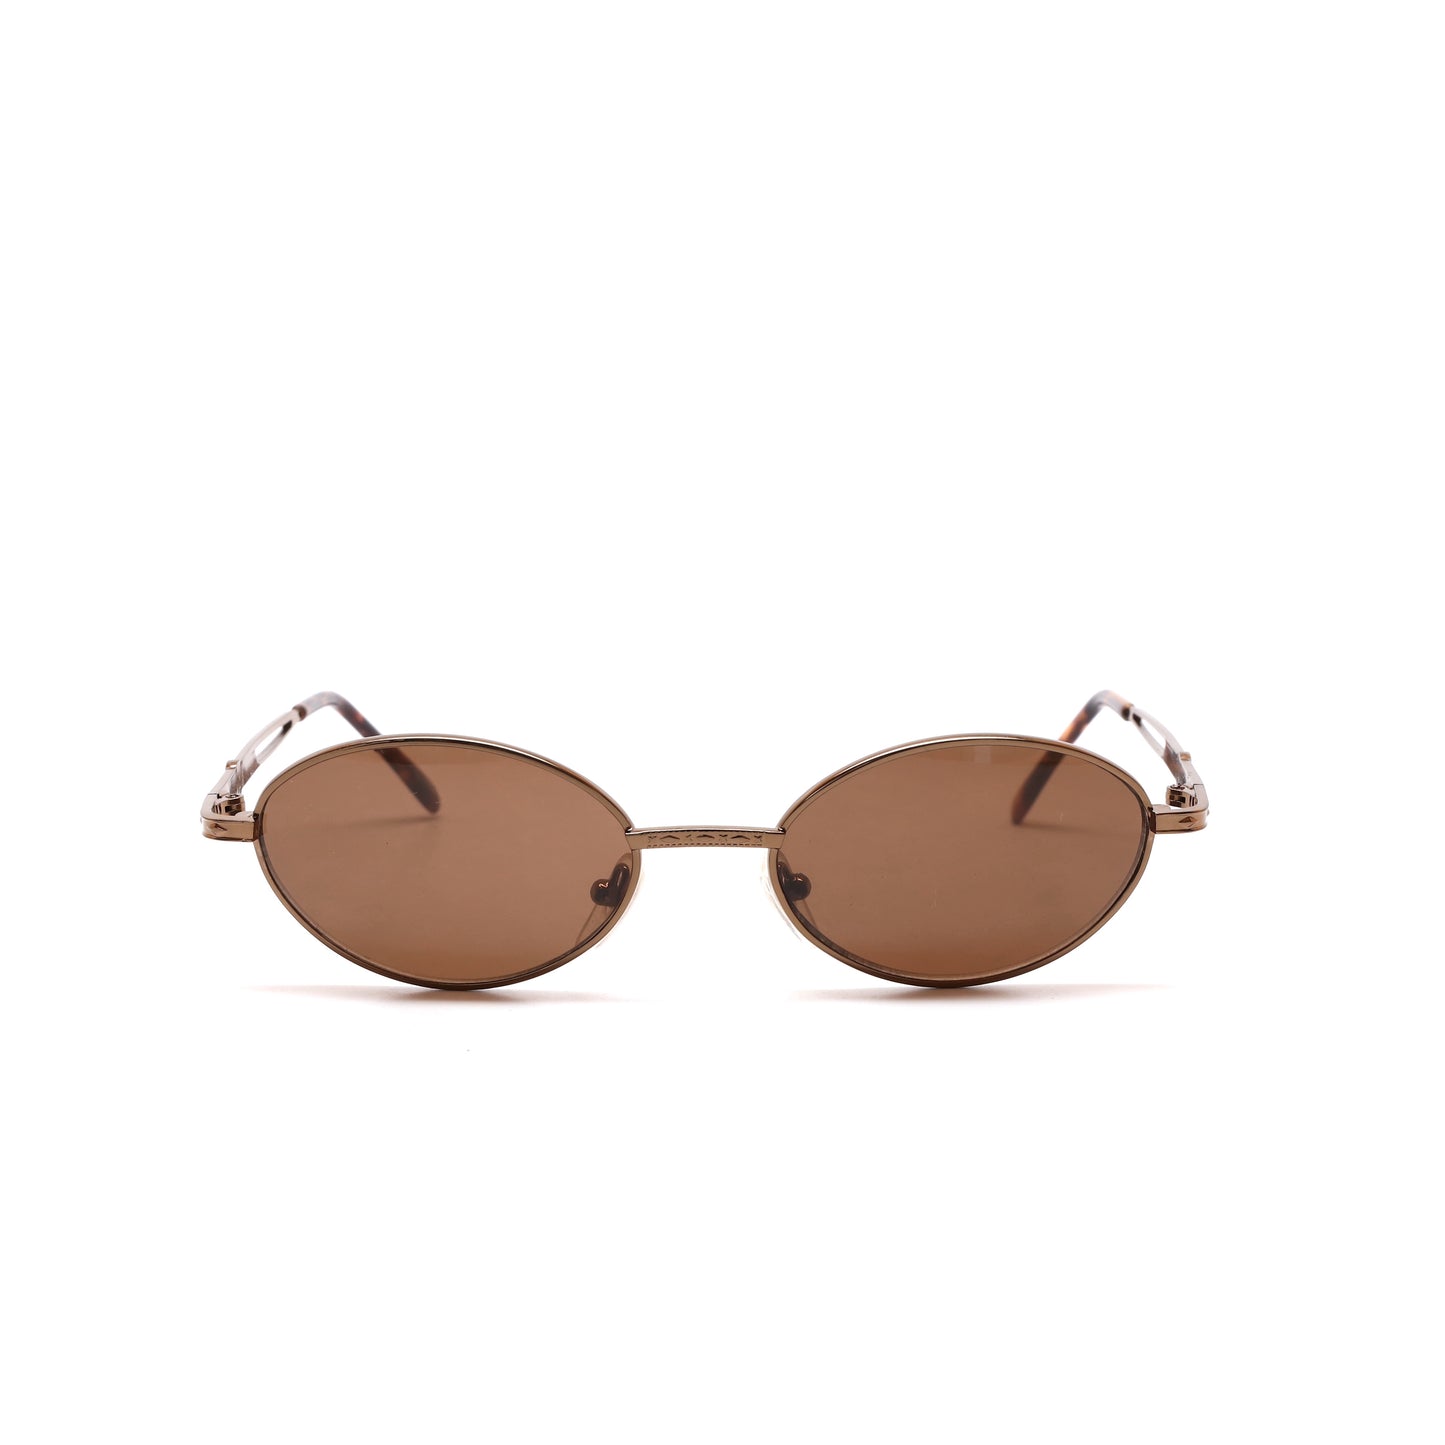 Vintage MINI Small Size 1992 Neo Santa Fe Oval Frame Sunglasses - Bronze